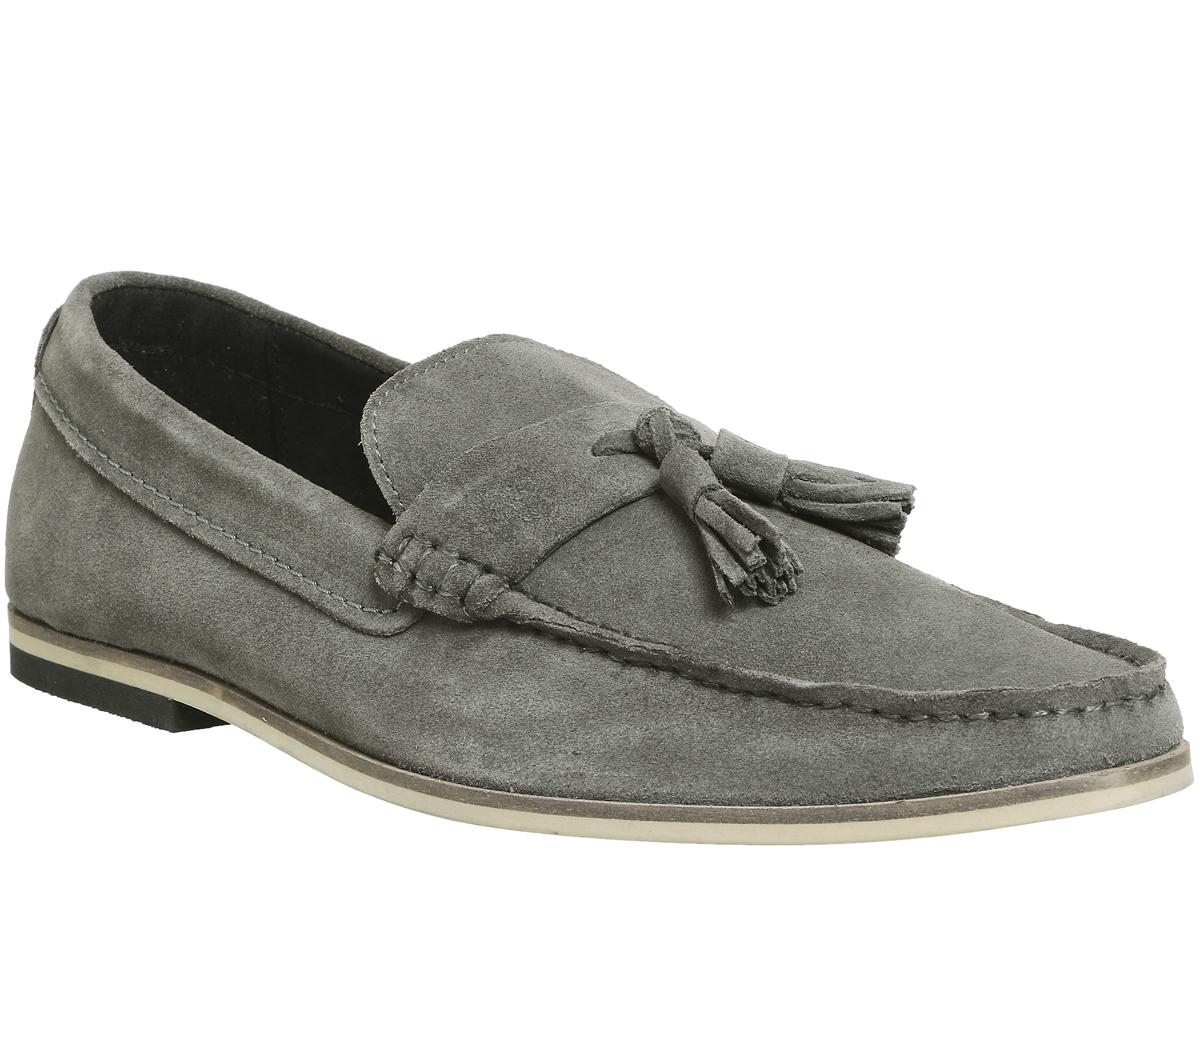 grey suede tassel loafers